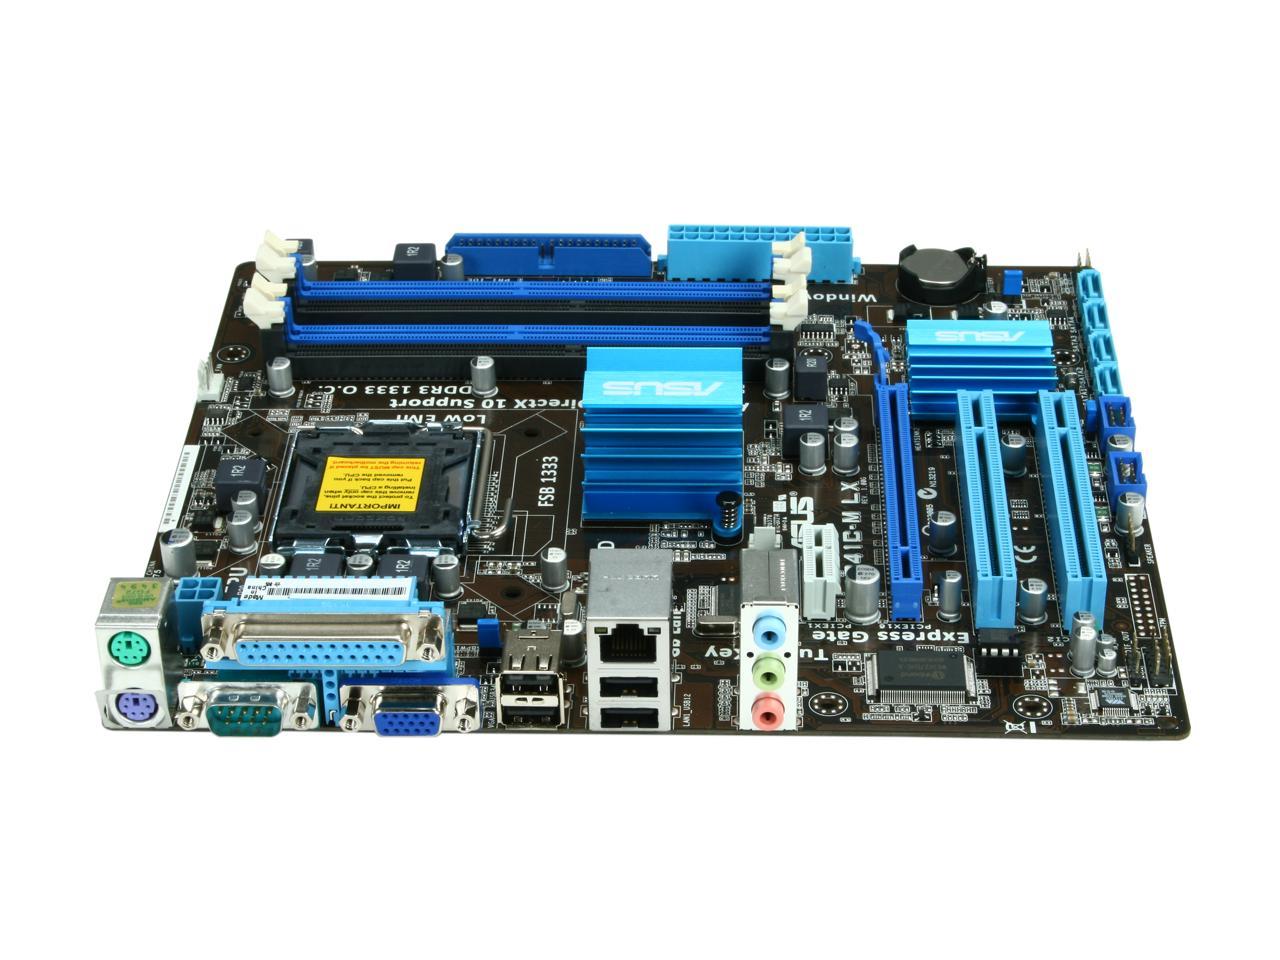 ASUS P5G41C-M LX LGA 775 Intel G41 Micro ATX Intel Motherboard